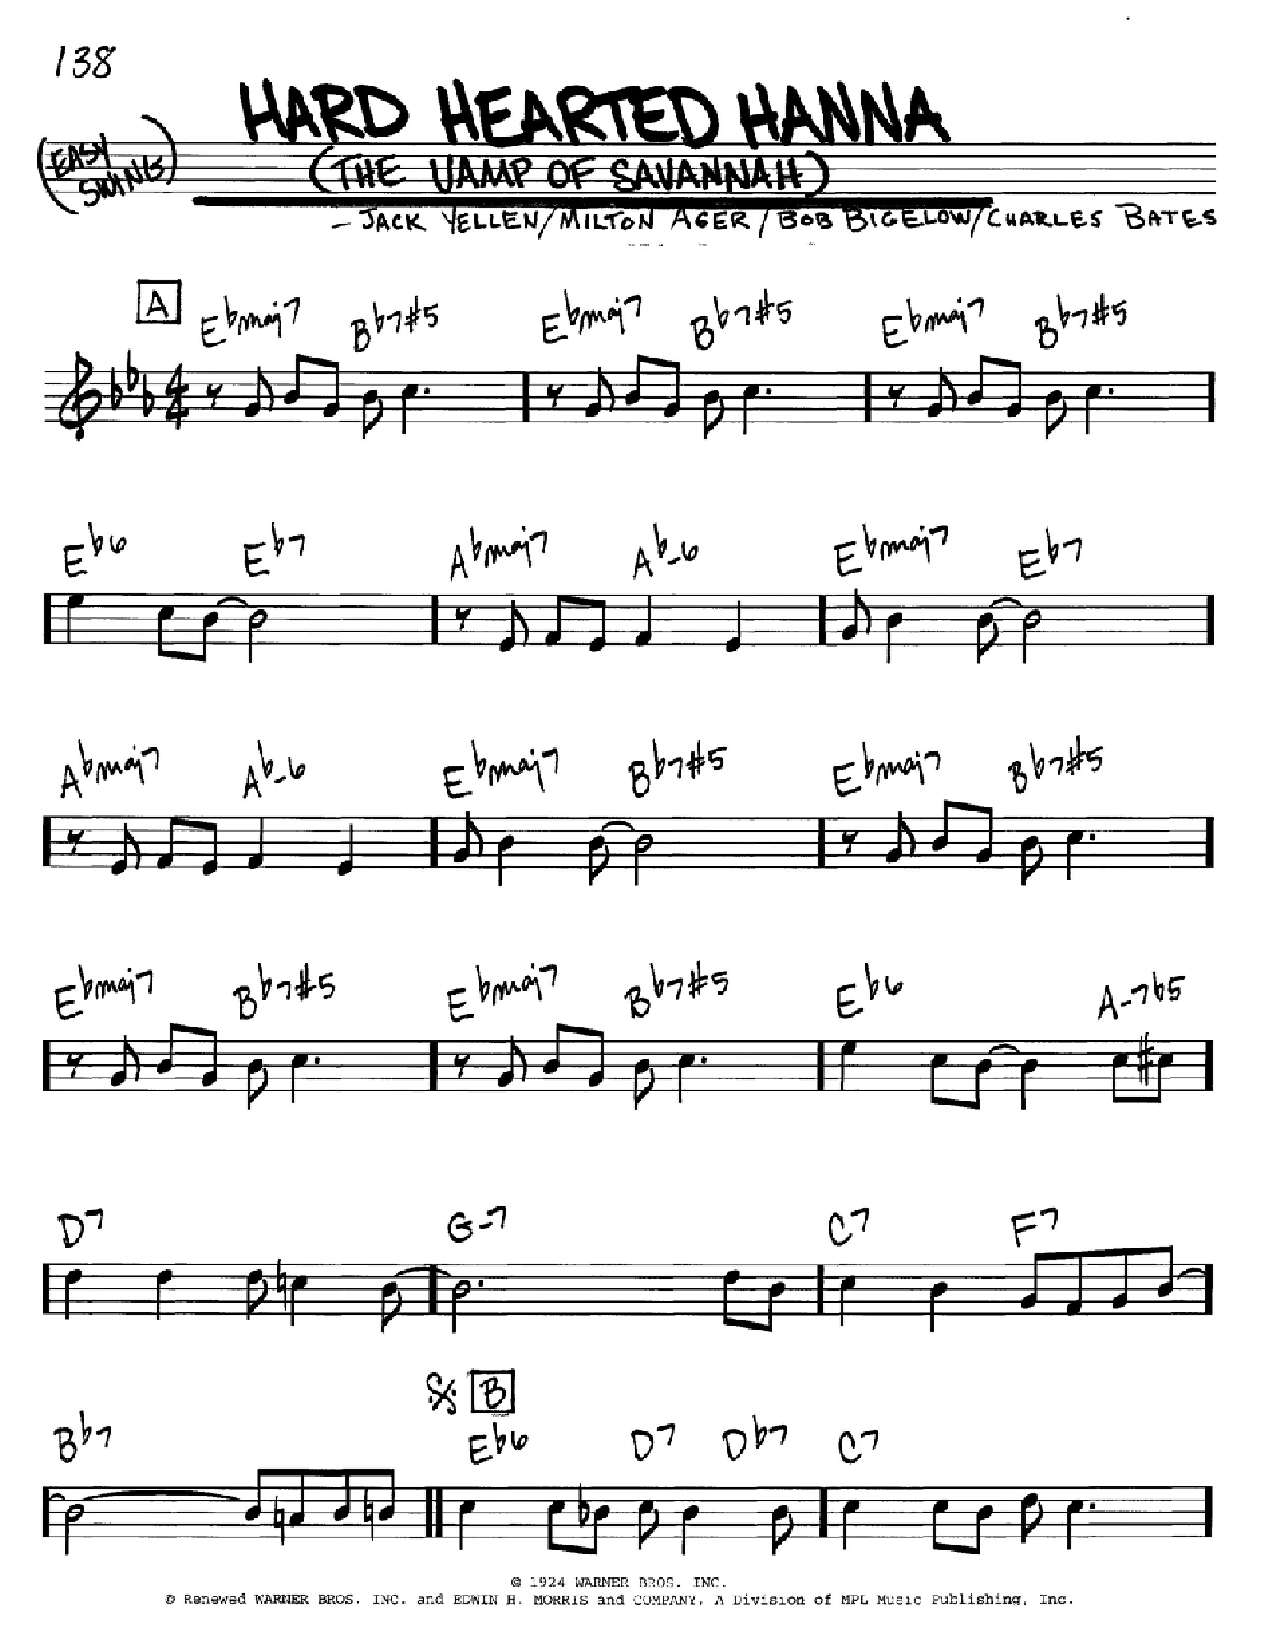 Jack Yellen Hard Hearted Hannah (The Vamp Of Savannah) Sheet Music Notes & Chords for Real Book – Melody, Lyrics & Chords - Download or Print PDF